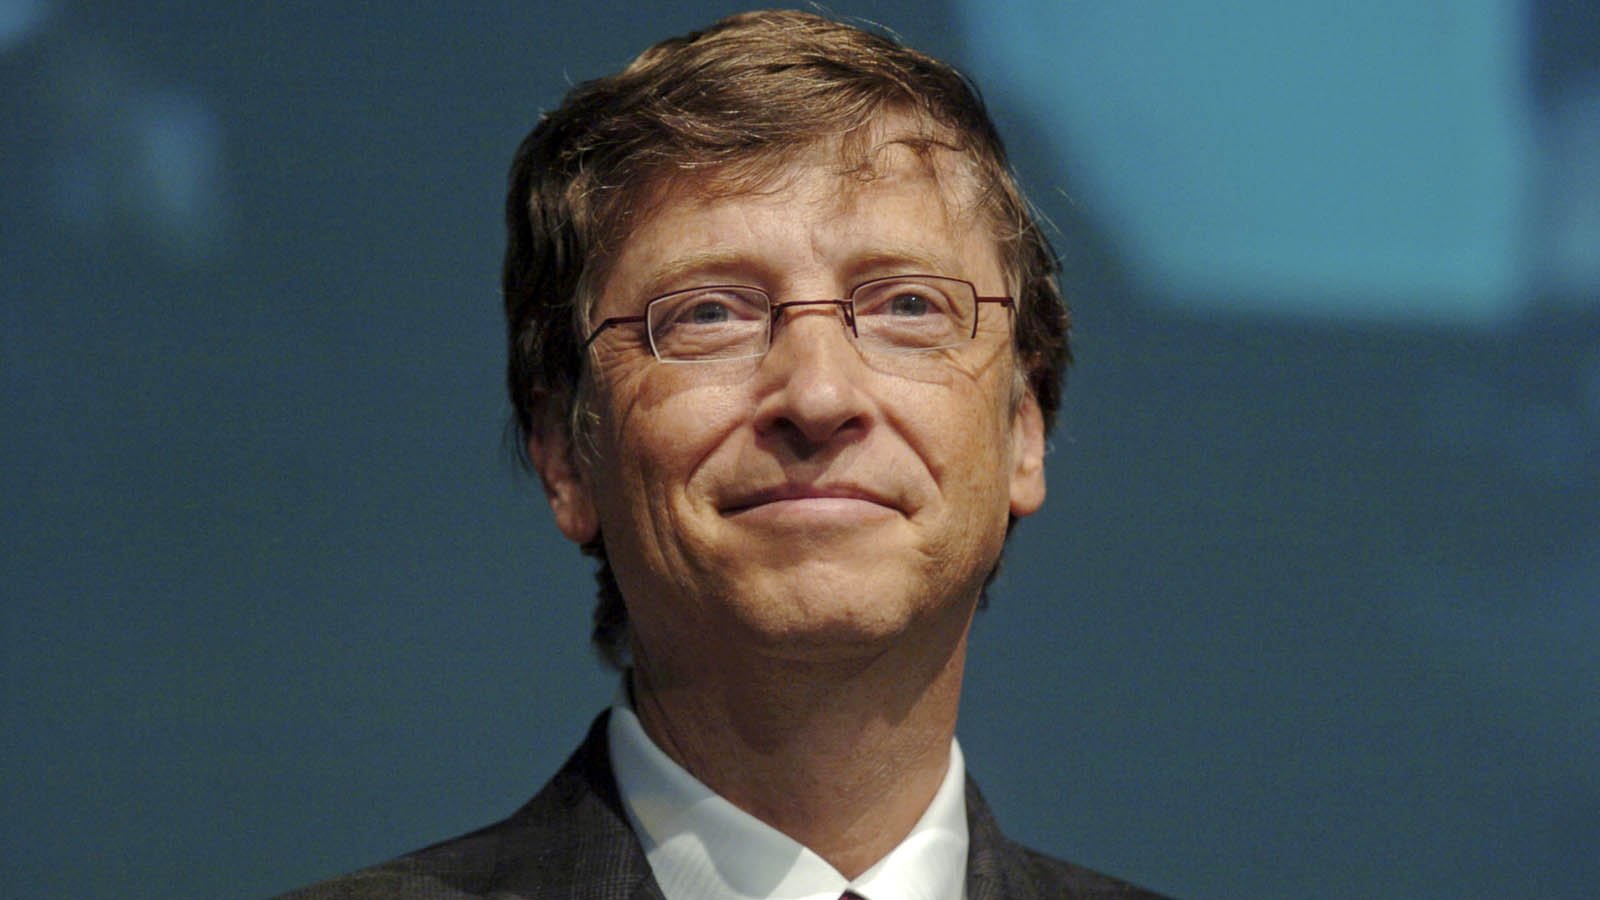 An image of Bill Gates